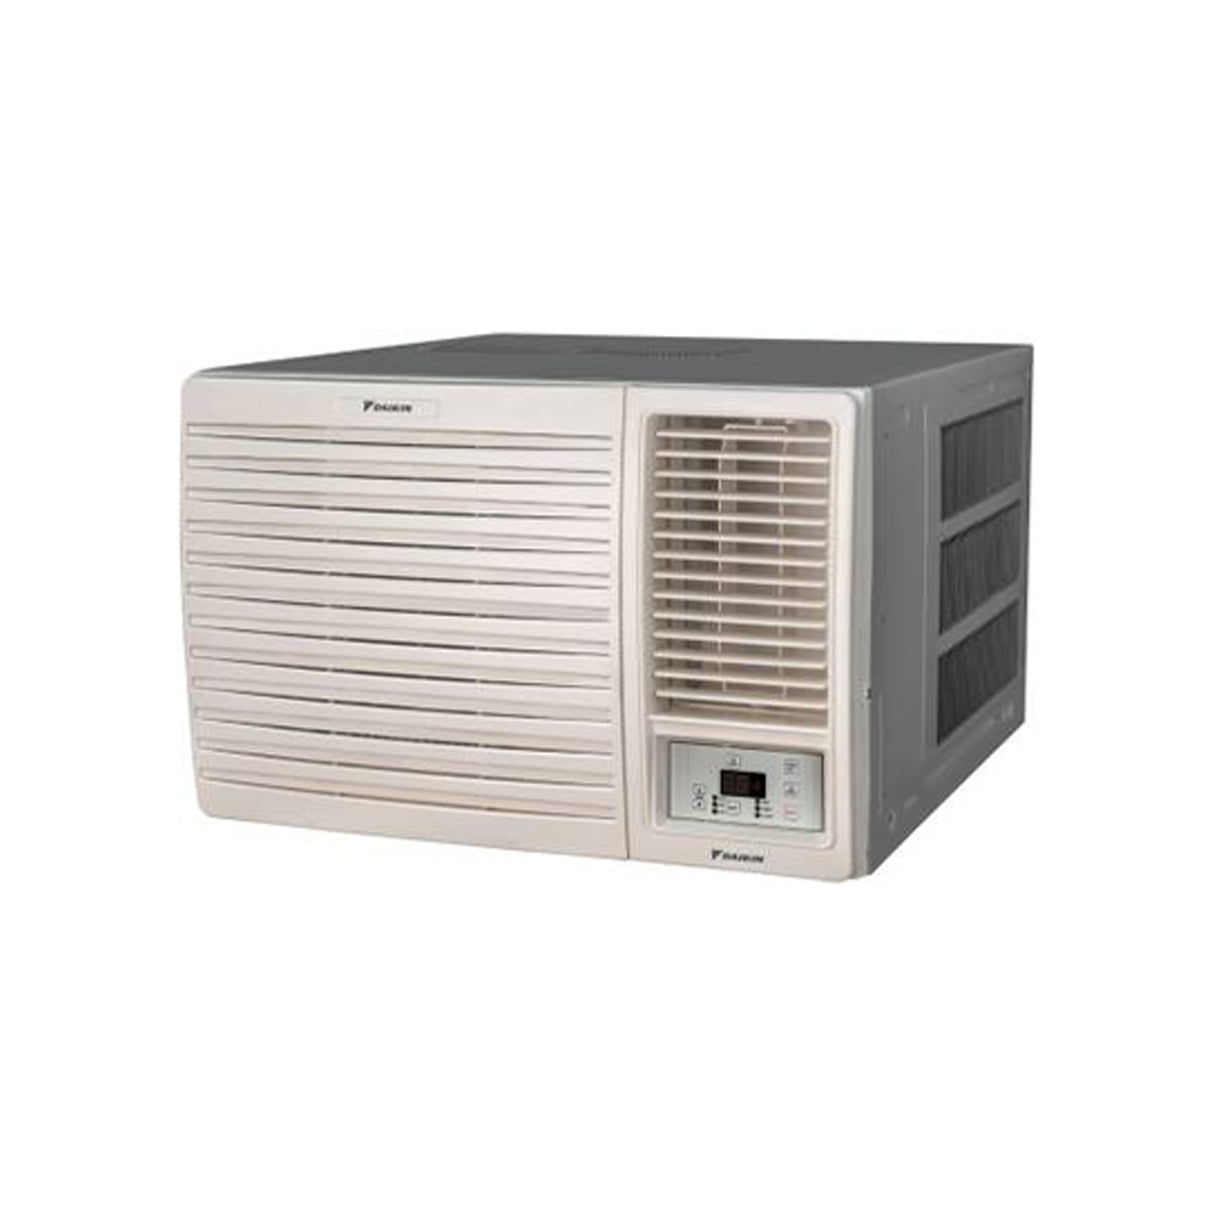 Best HVAC: Daikin Window AC, 1.5 Ton 3 STAR FRWL50UV - Efficient Cooling.